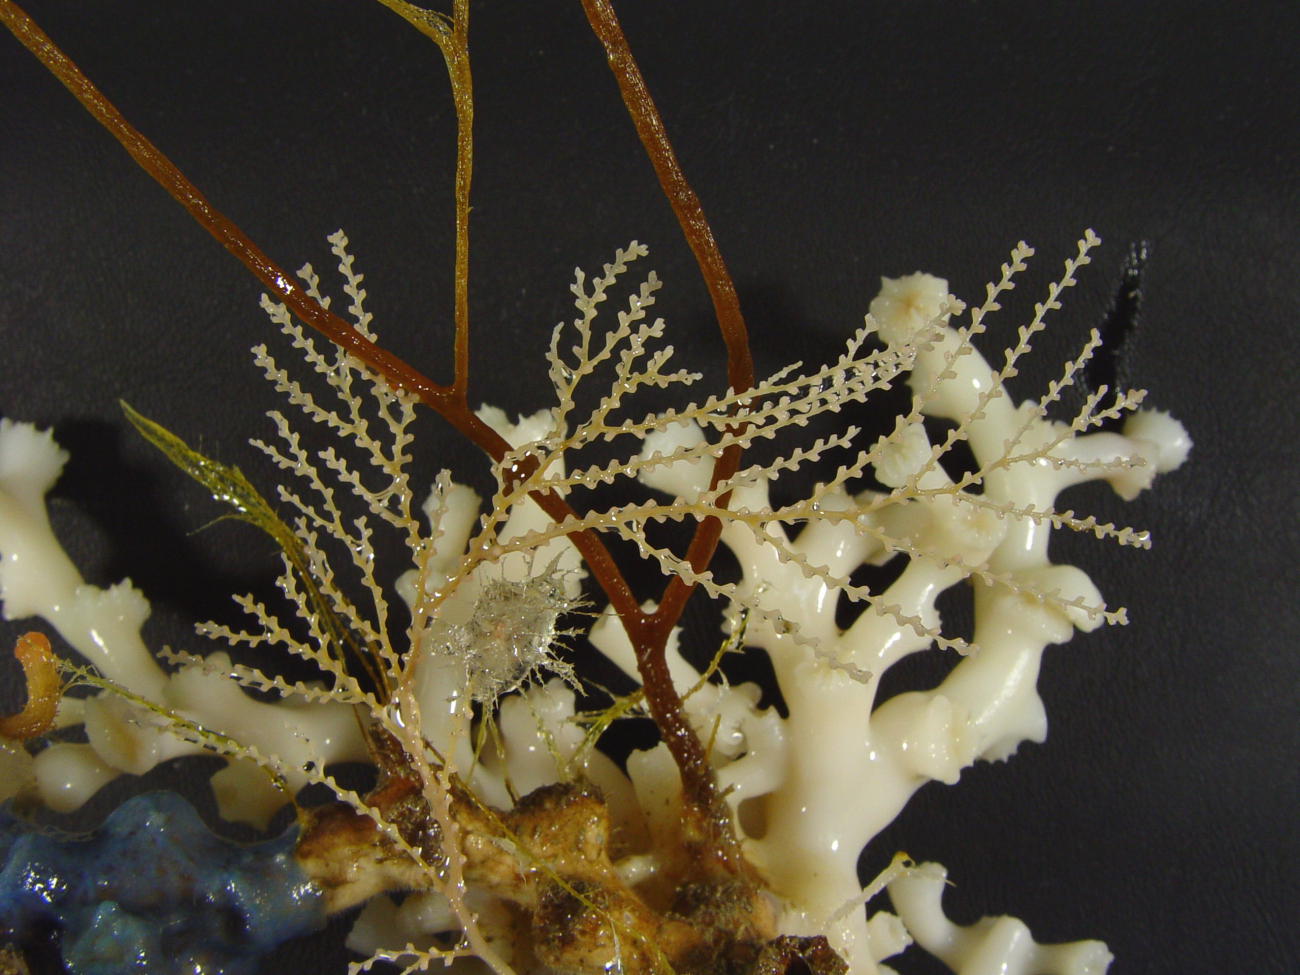 Lophelia bush with an array of various invertebrates